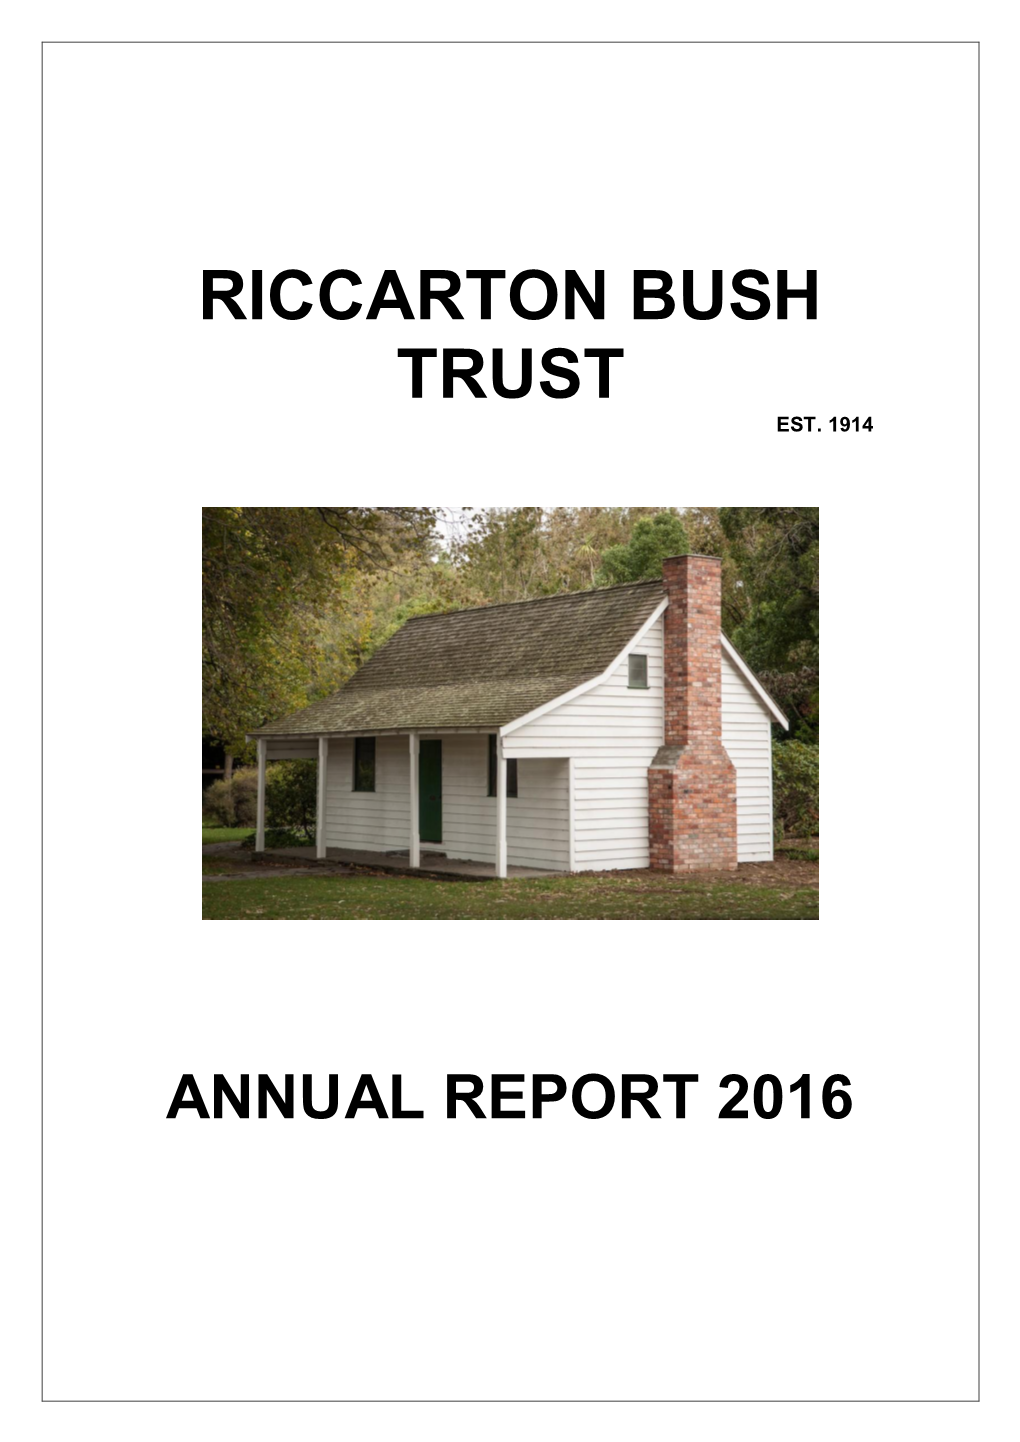 Riccarton Bush Trust Annual Report 2016